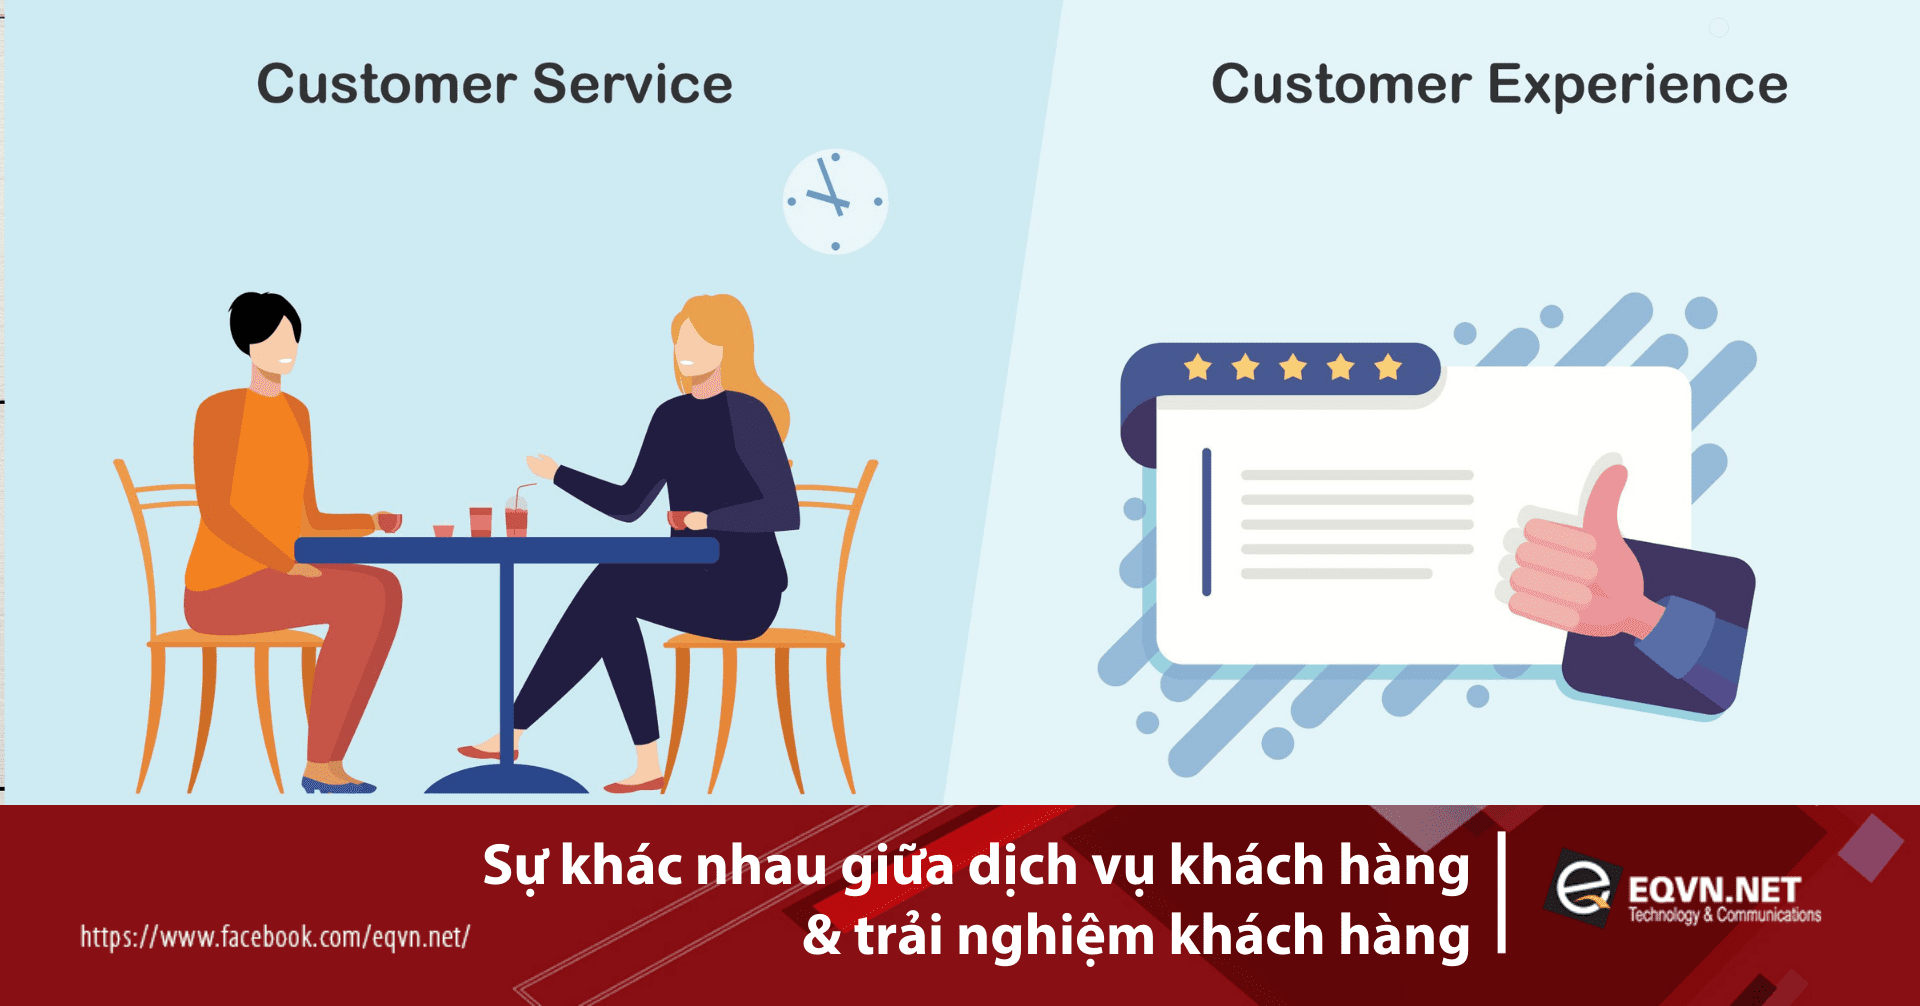 Sự khác nhau giữa Customer Experience và Customer Service